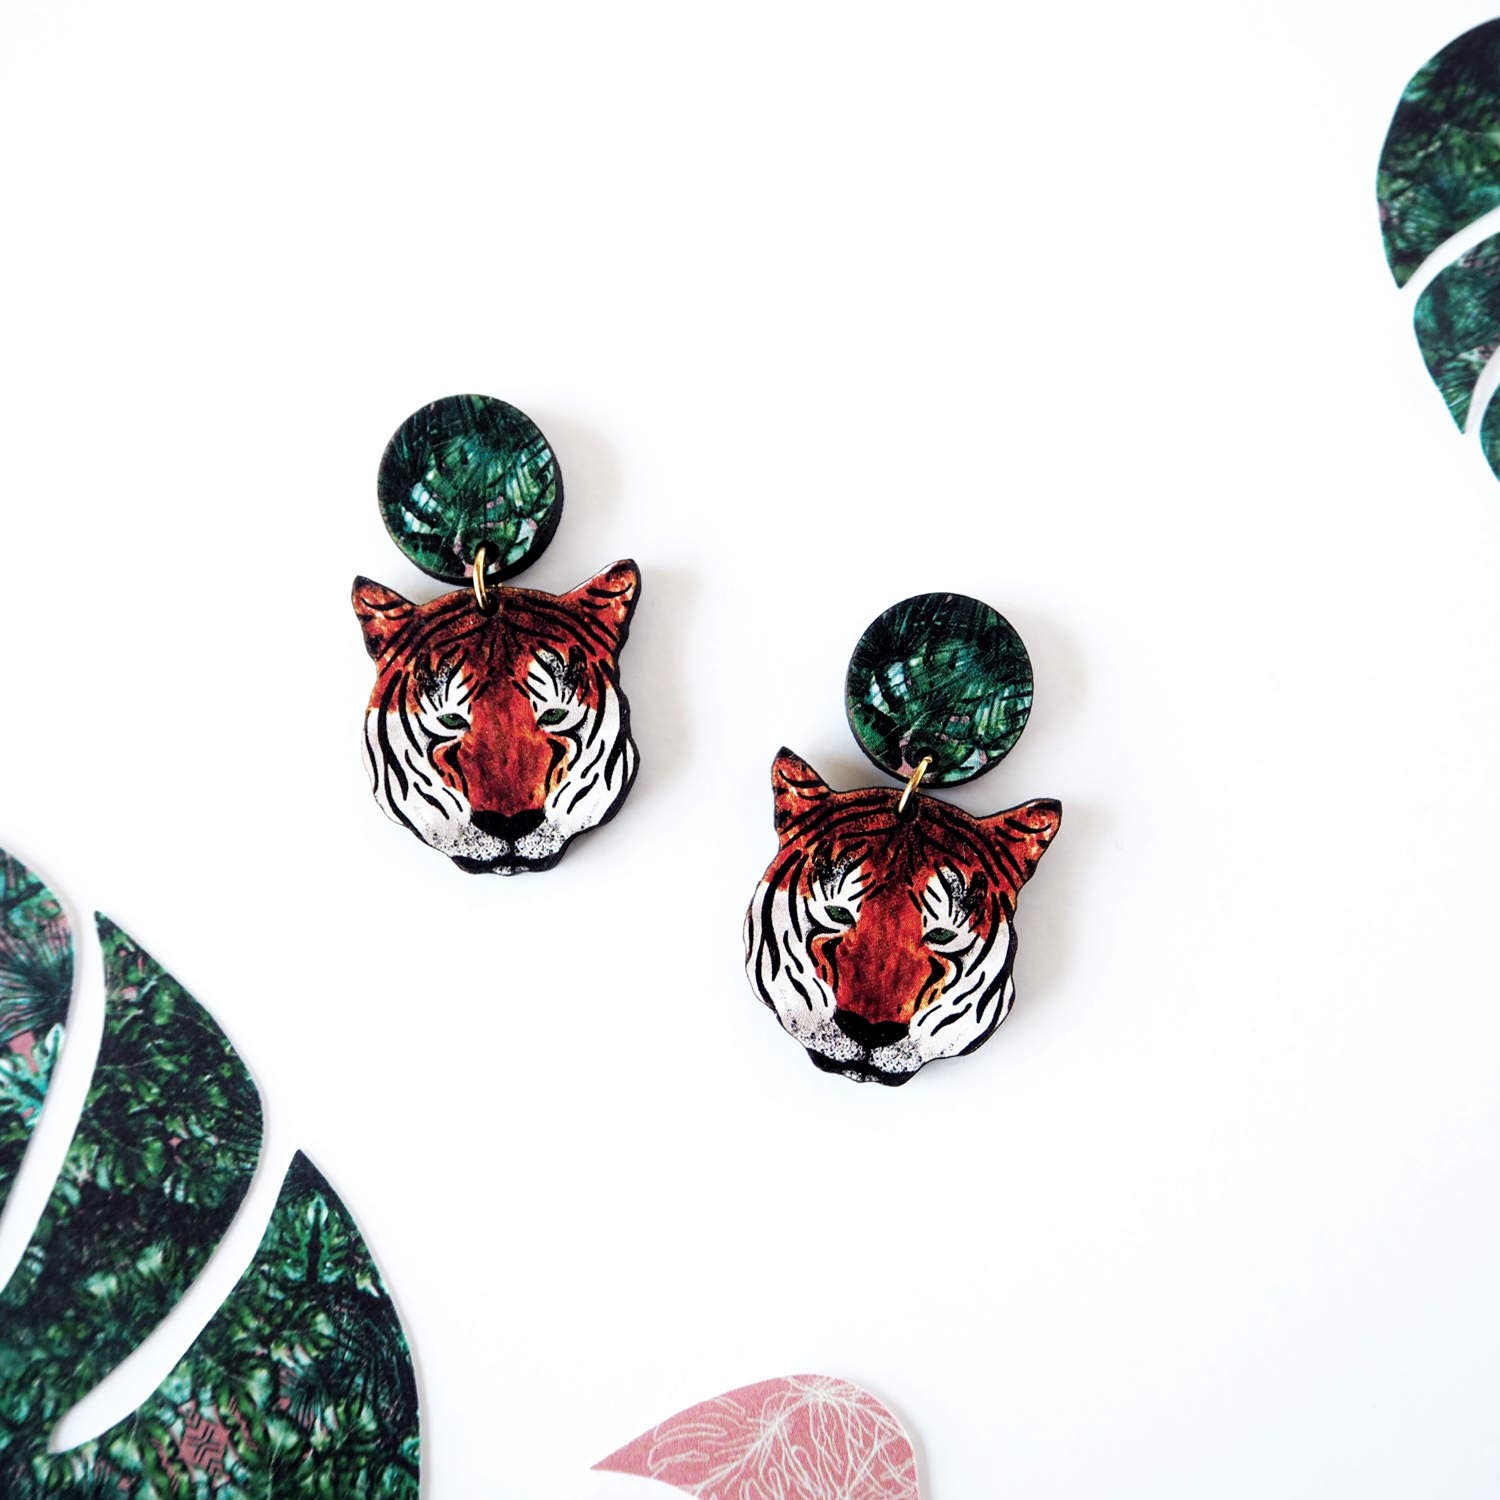 statement Tiger Earrings - Dangle Drop Jewellery Animal Accessories Modern